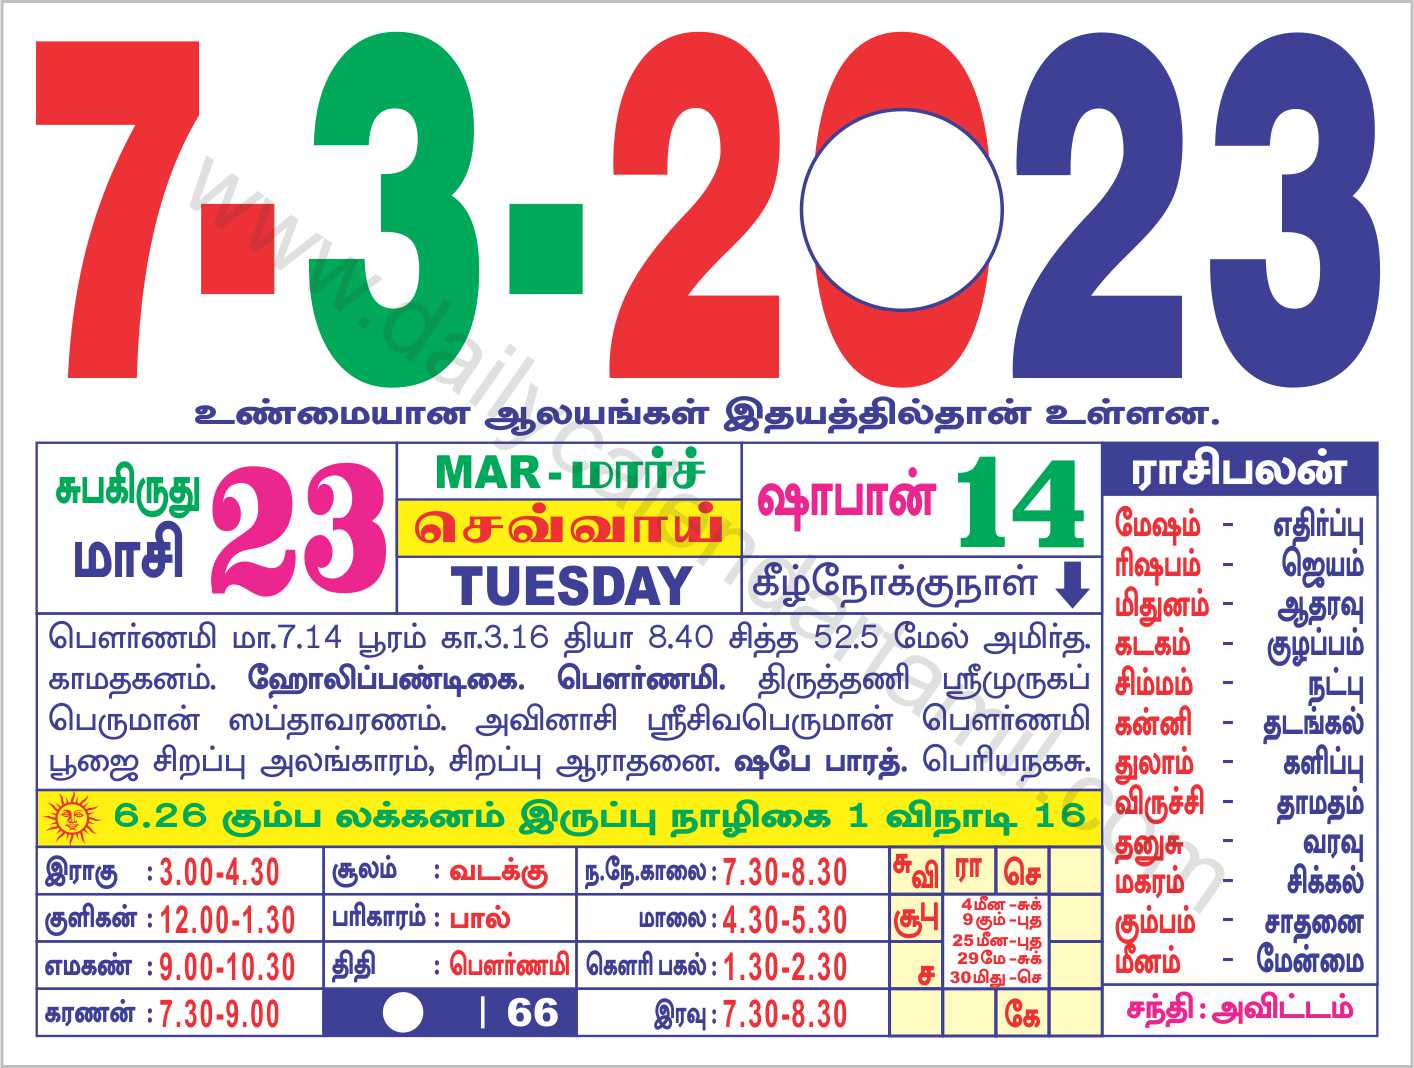 Pournami 2023 Date & Time in Tamil Calendar